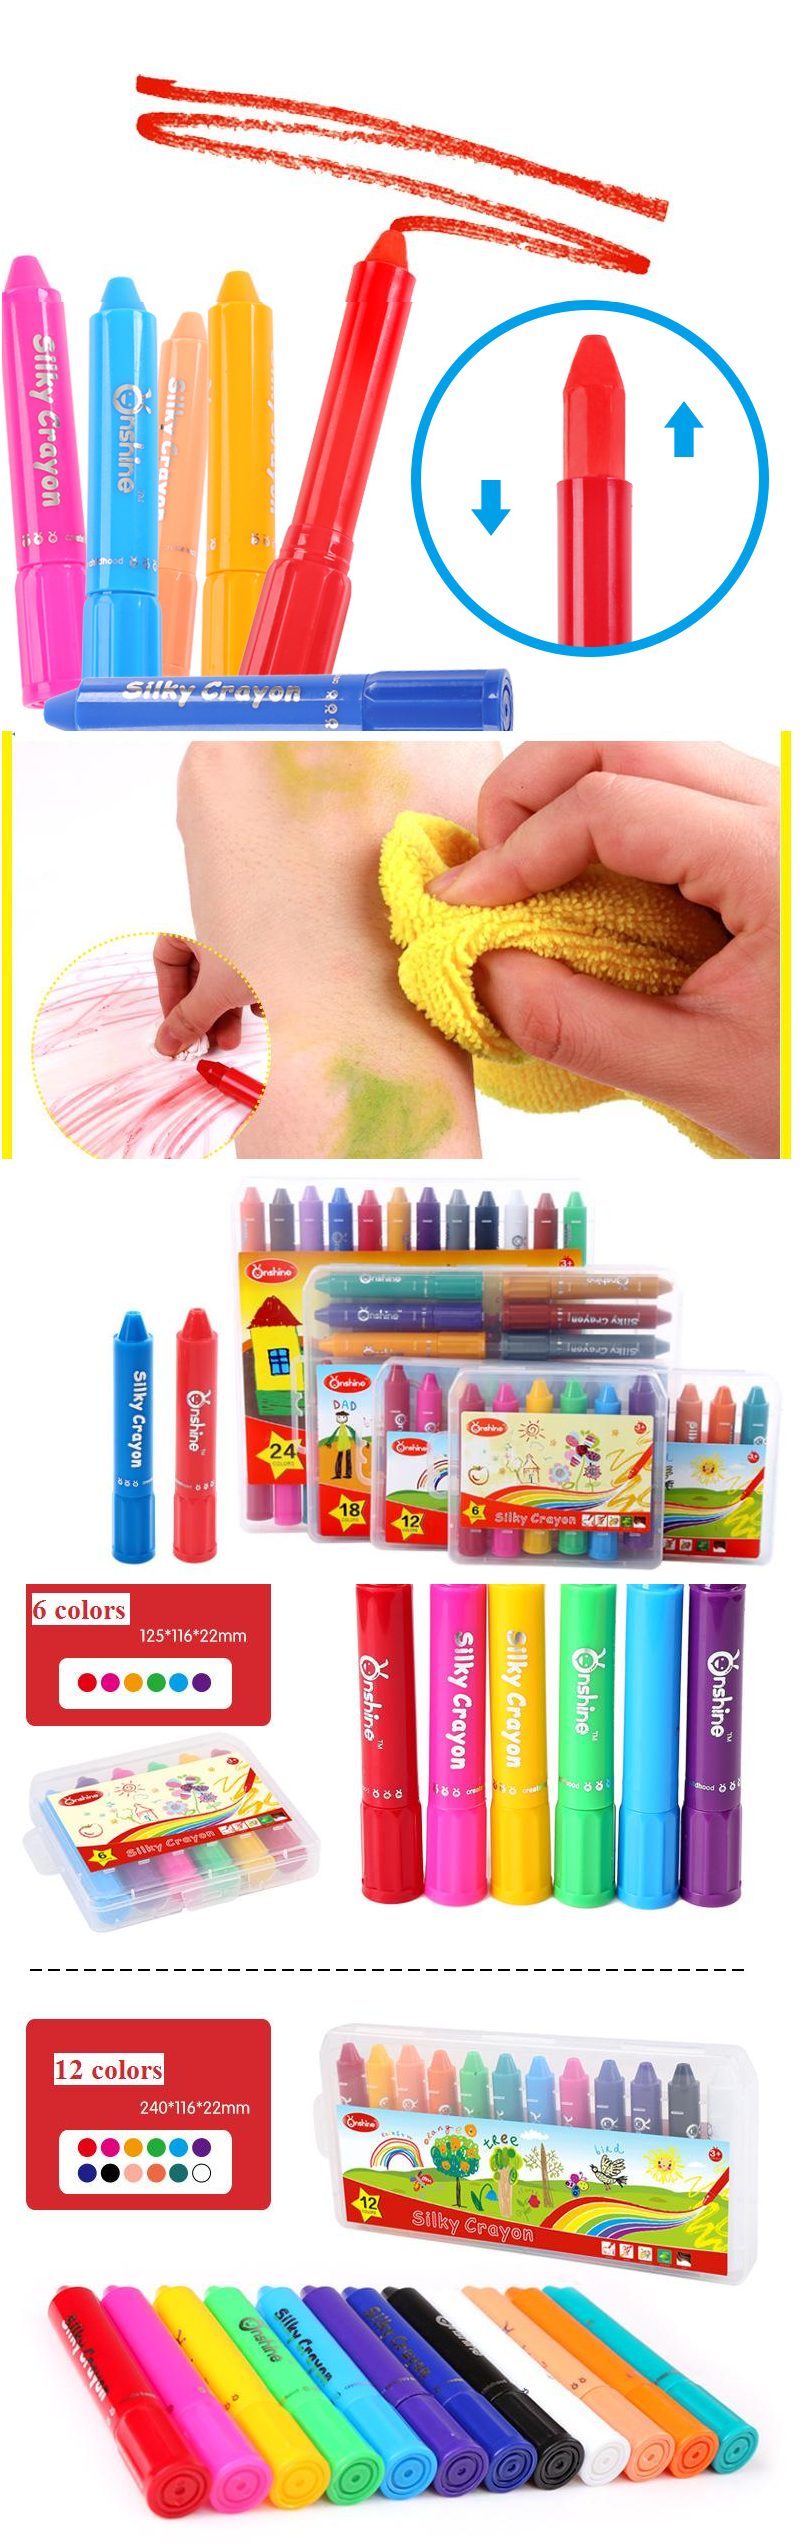 Onshine-18-Pcs-Crayon-Pens-Watercolor-Non-Toxic-Washable-Crayons-Art-Painting-Tools-Office-School-Su-1544858-3